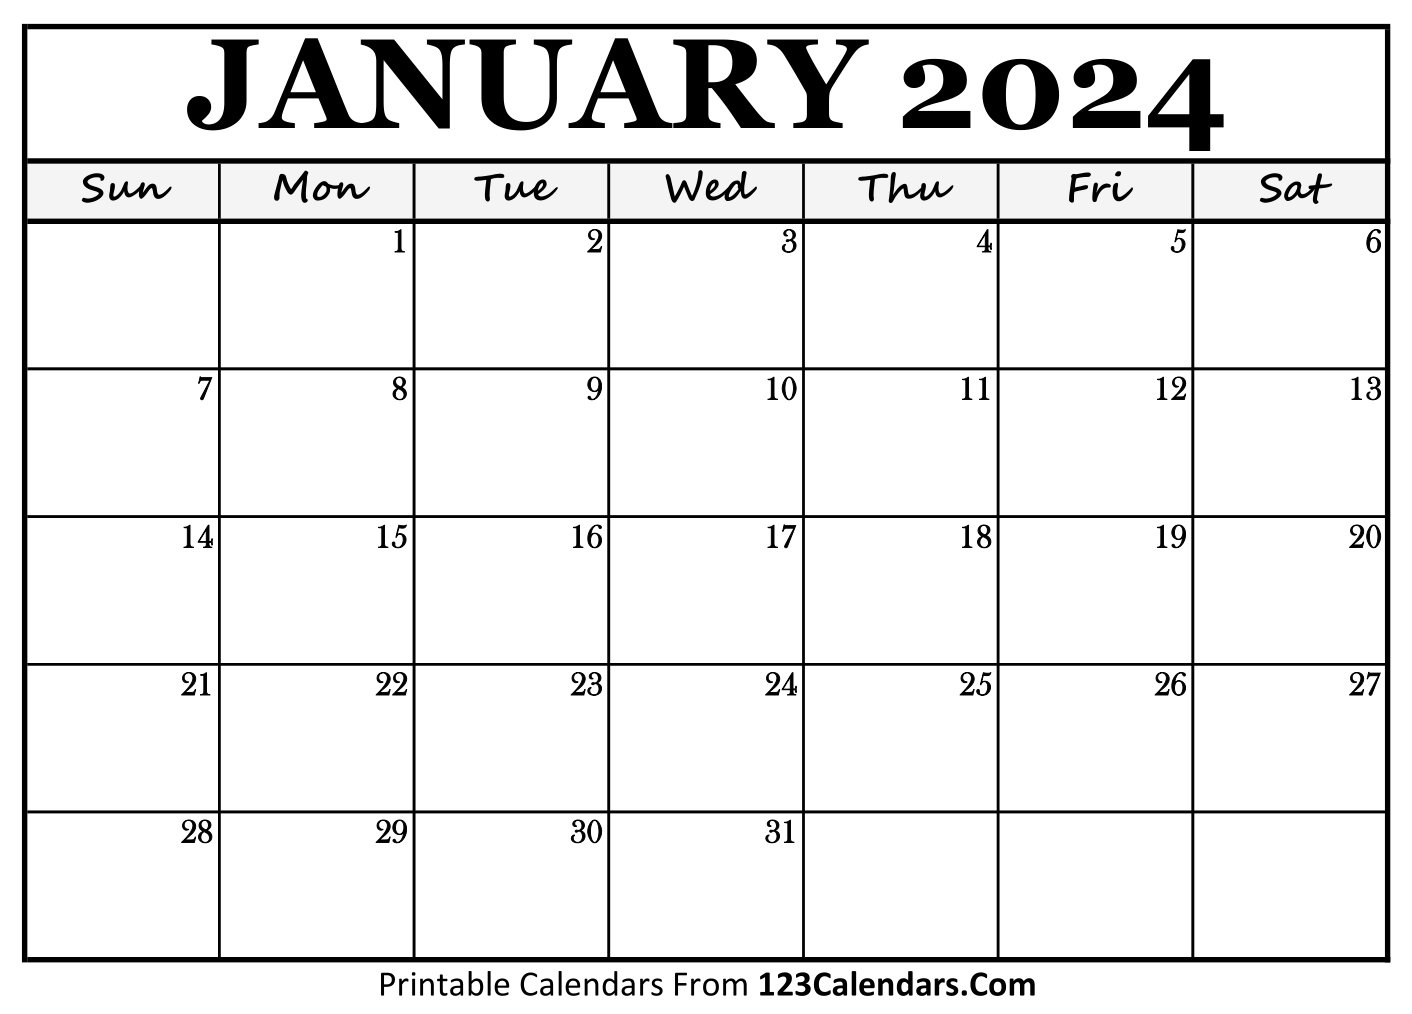 Printable January 2024 Calendar Templates - 123Calendars | Free Printable Calendar 2024 Jan